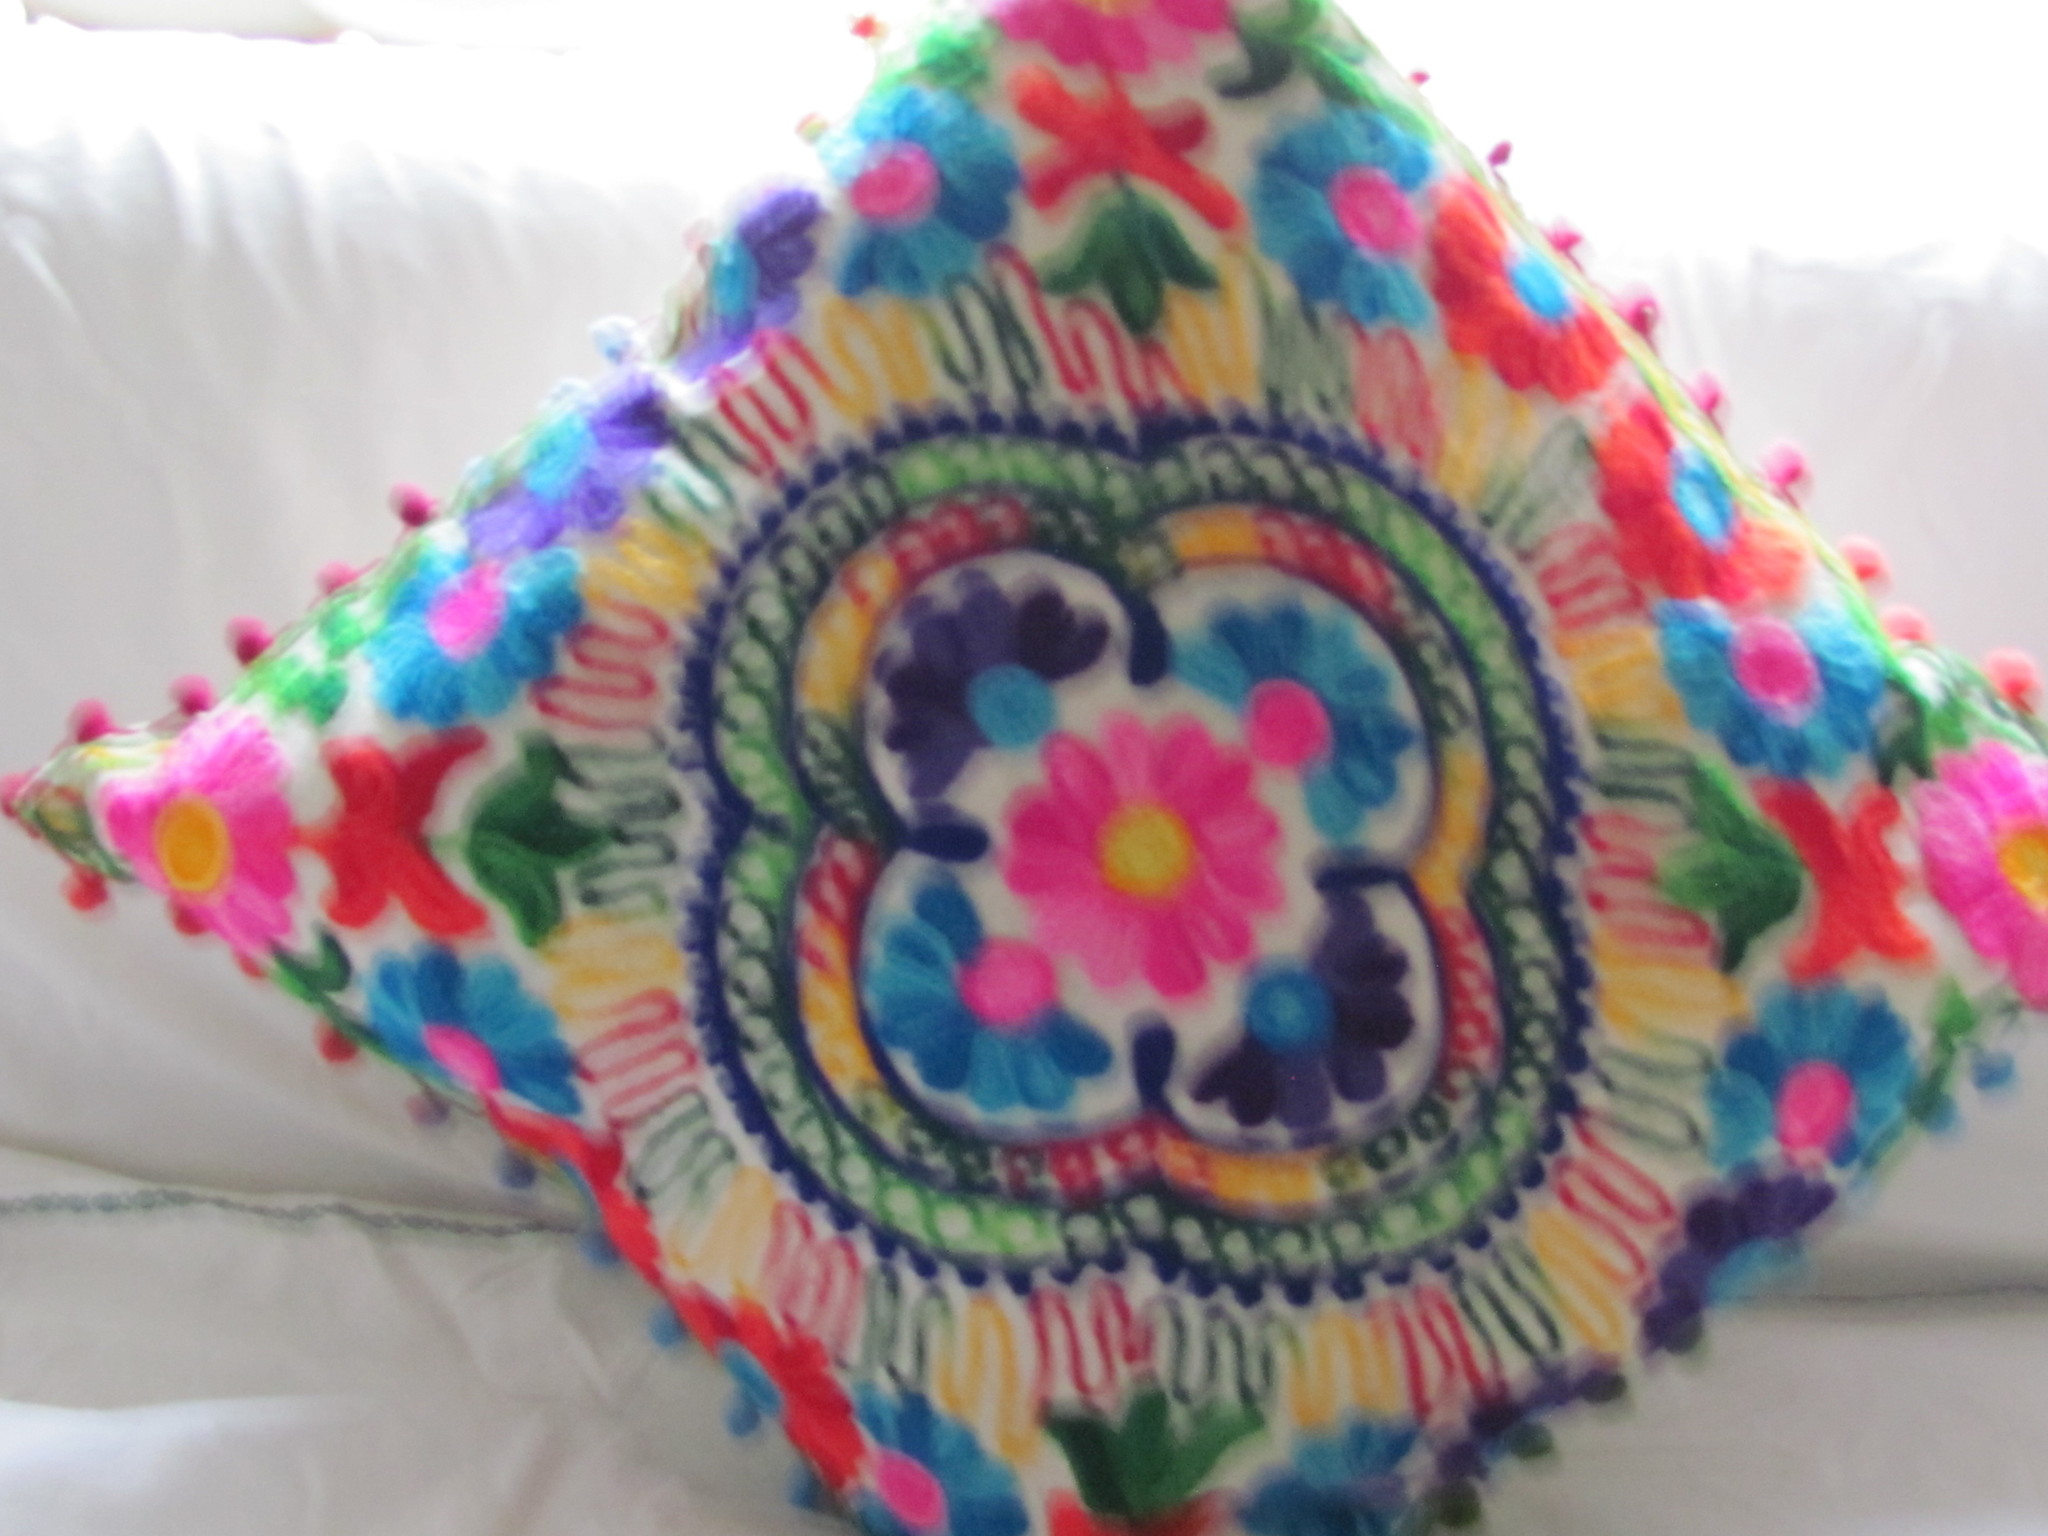 cushion cover susani embroiderd in Uzbeki style